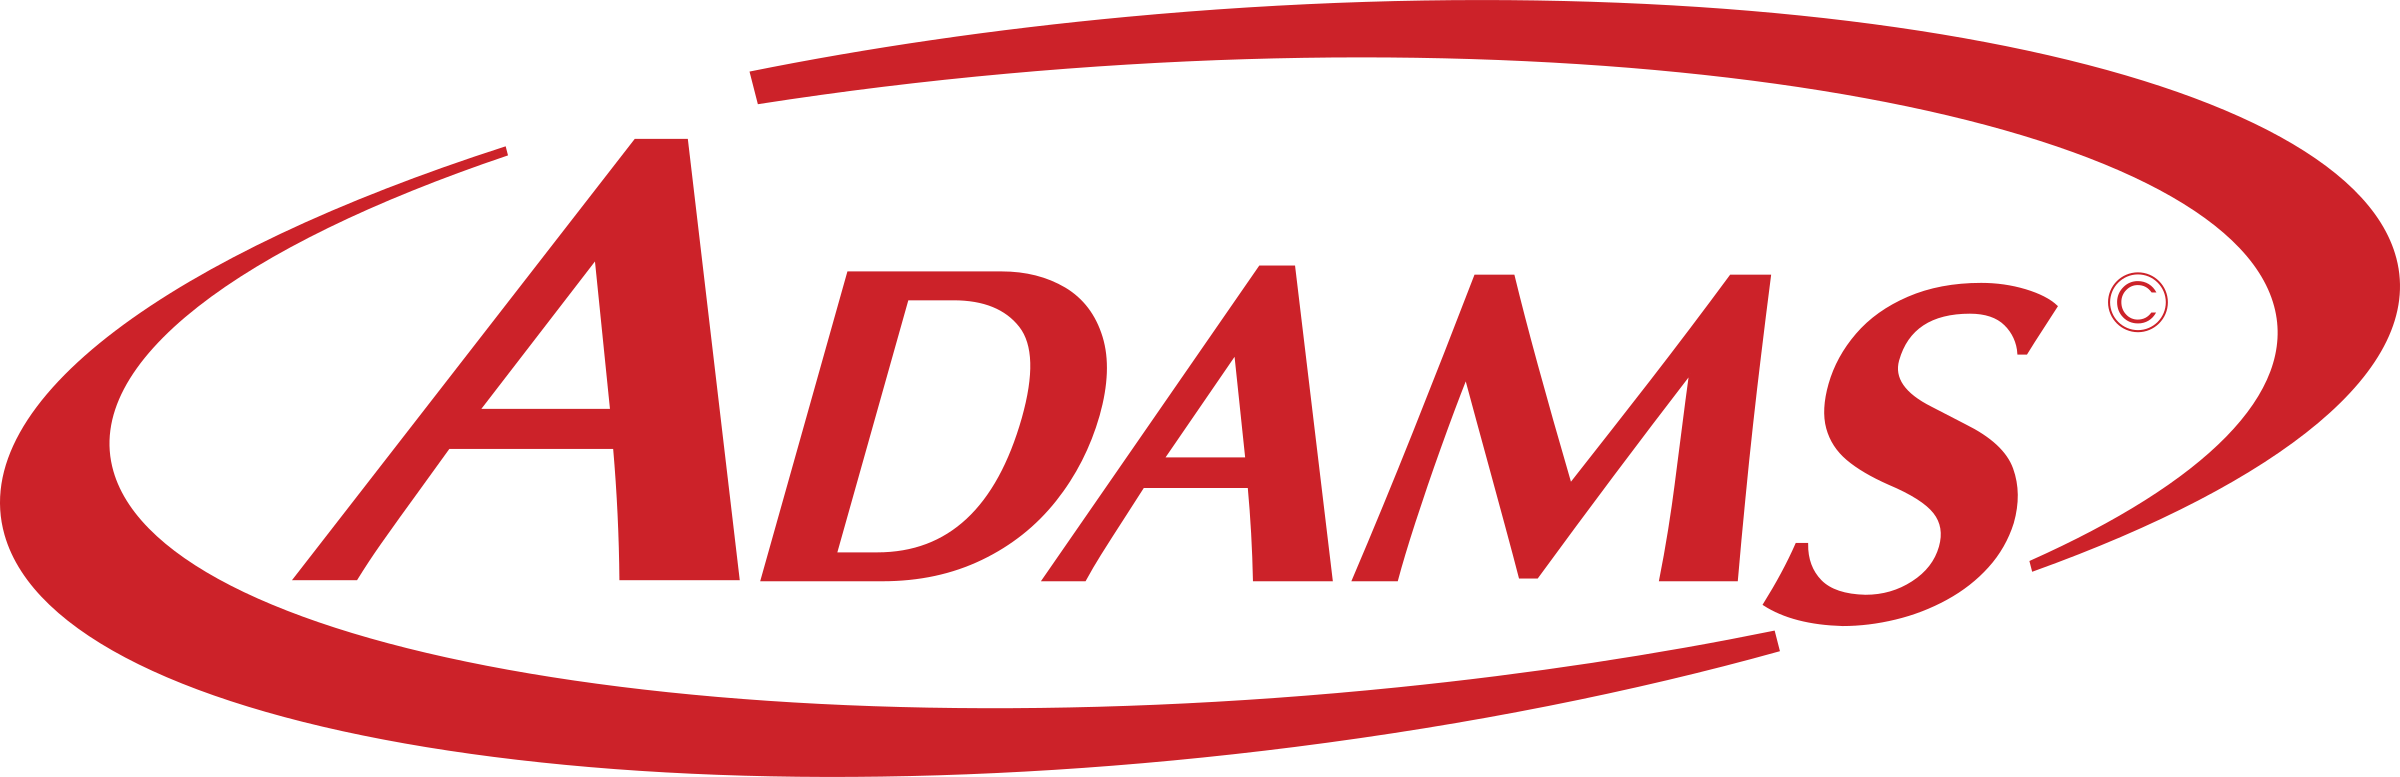 Adams Logo - Adams Logo PNG Transparent & SVG Vector - Freebie Supply